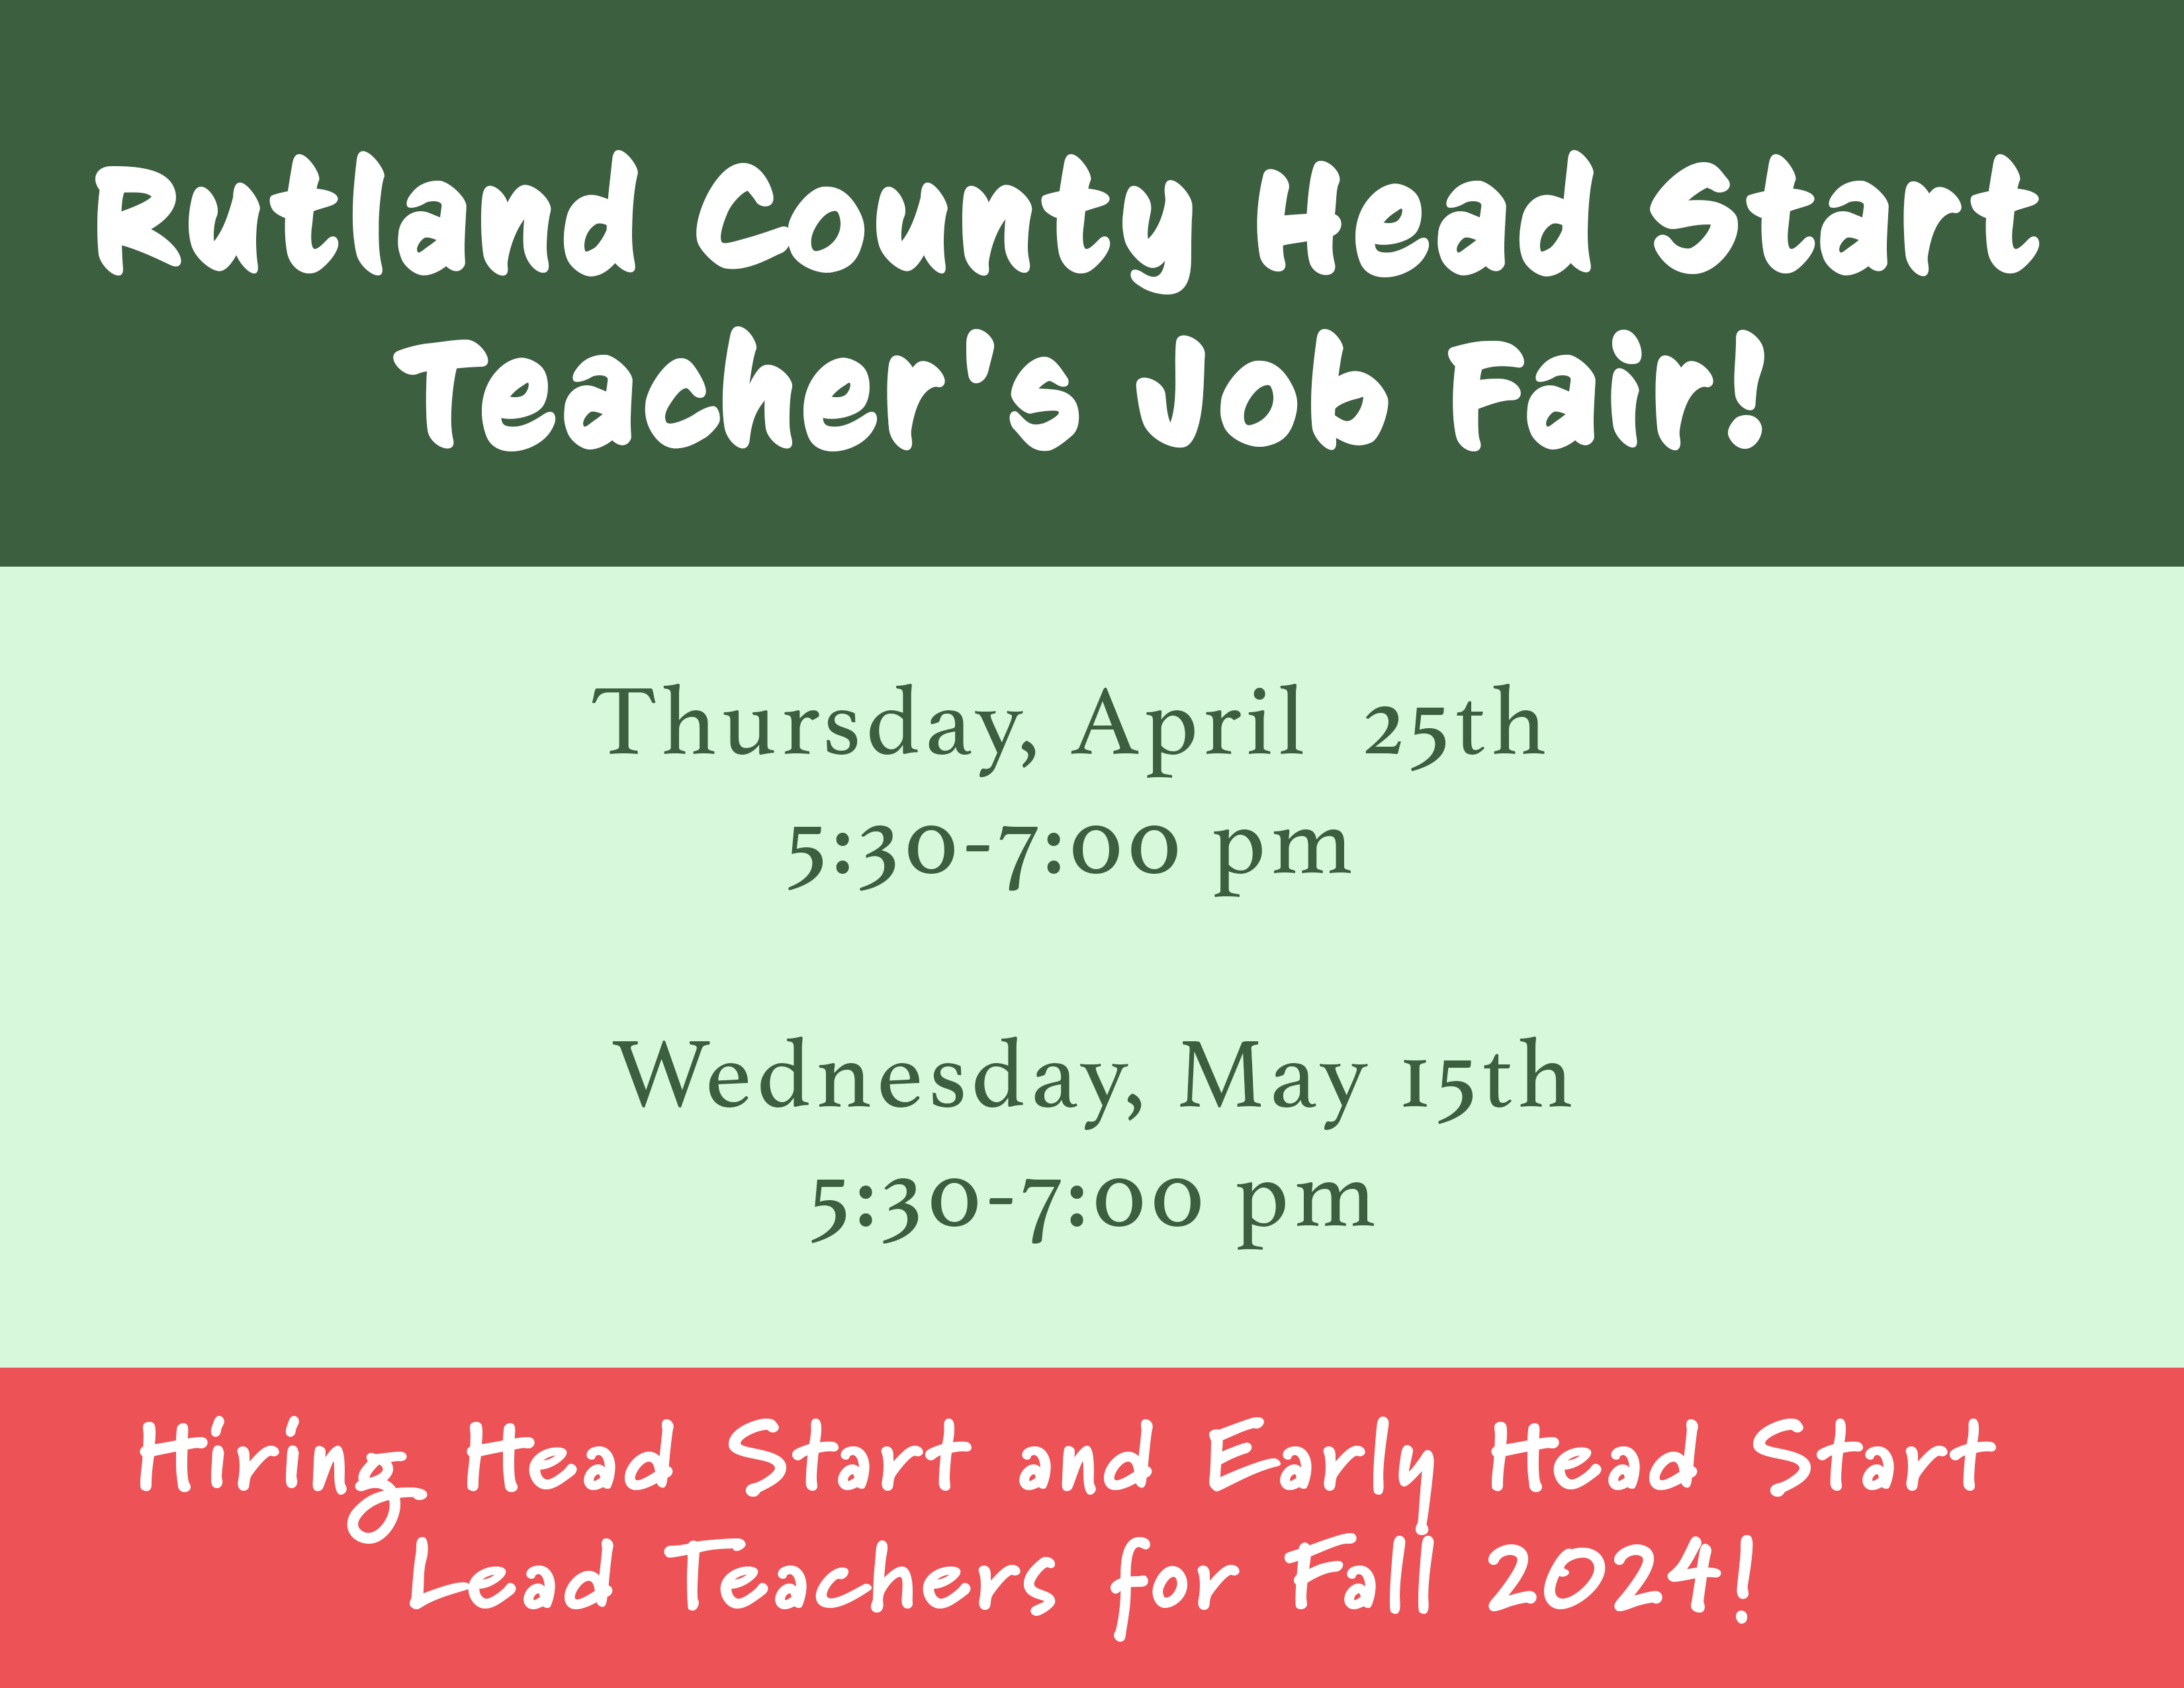 Rutland County Head Start Teachers’ Job Fair!